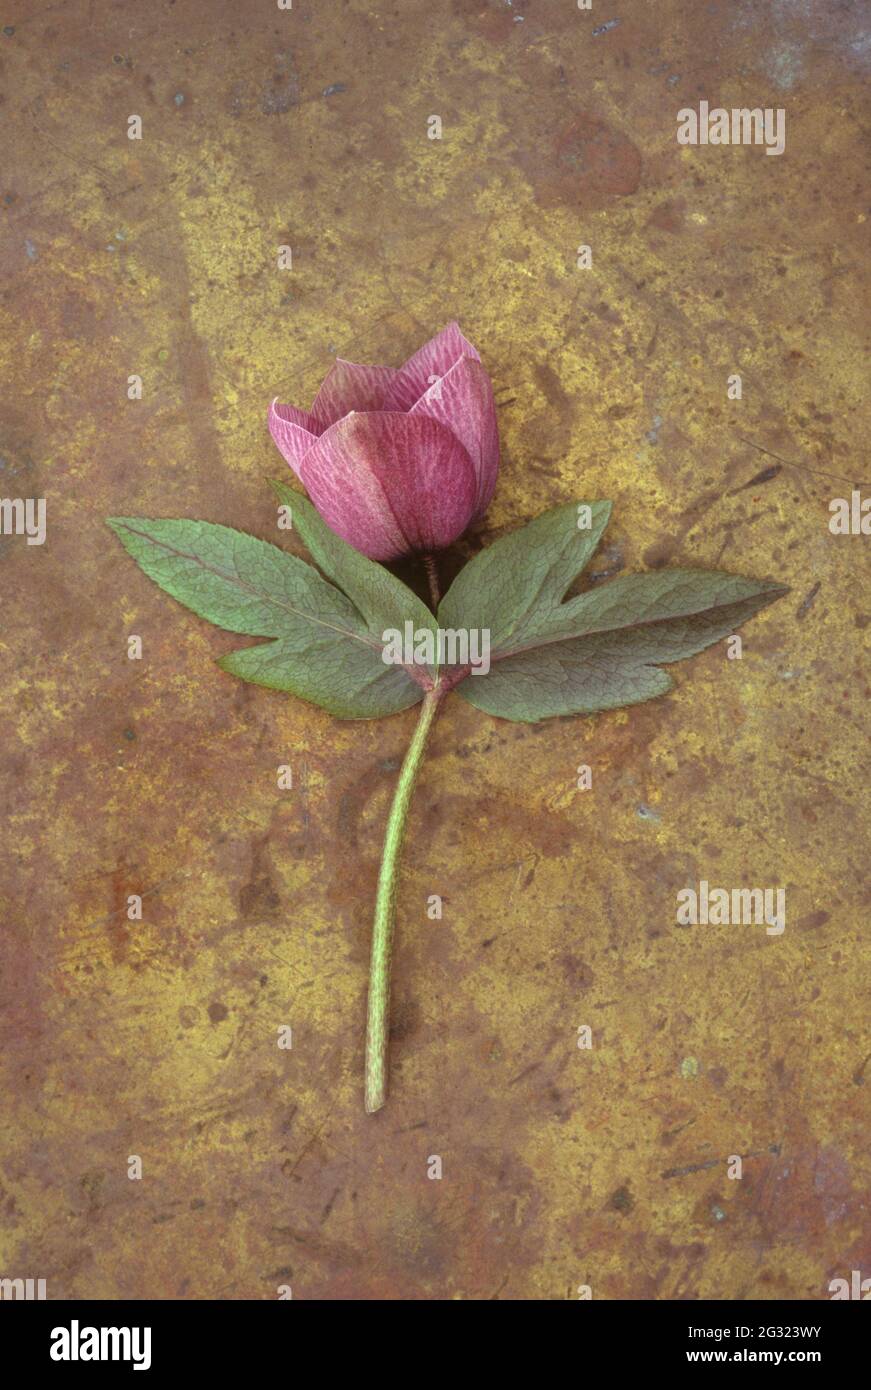 Single stem and half-open flower bud of Lenten rose or Helleborus oprientalis lying on tarnished brass Stock Photo